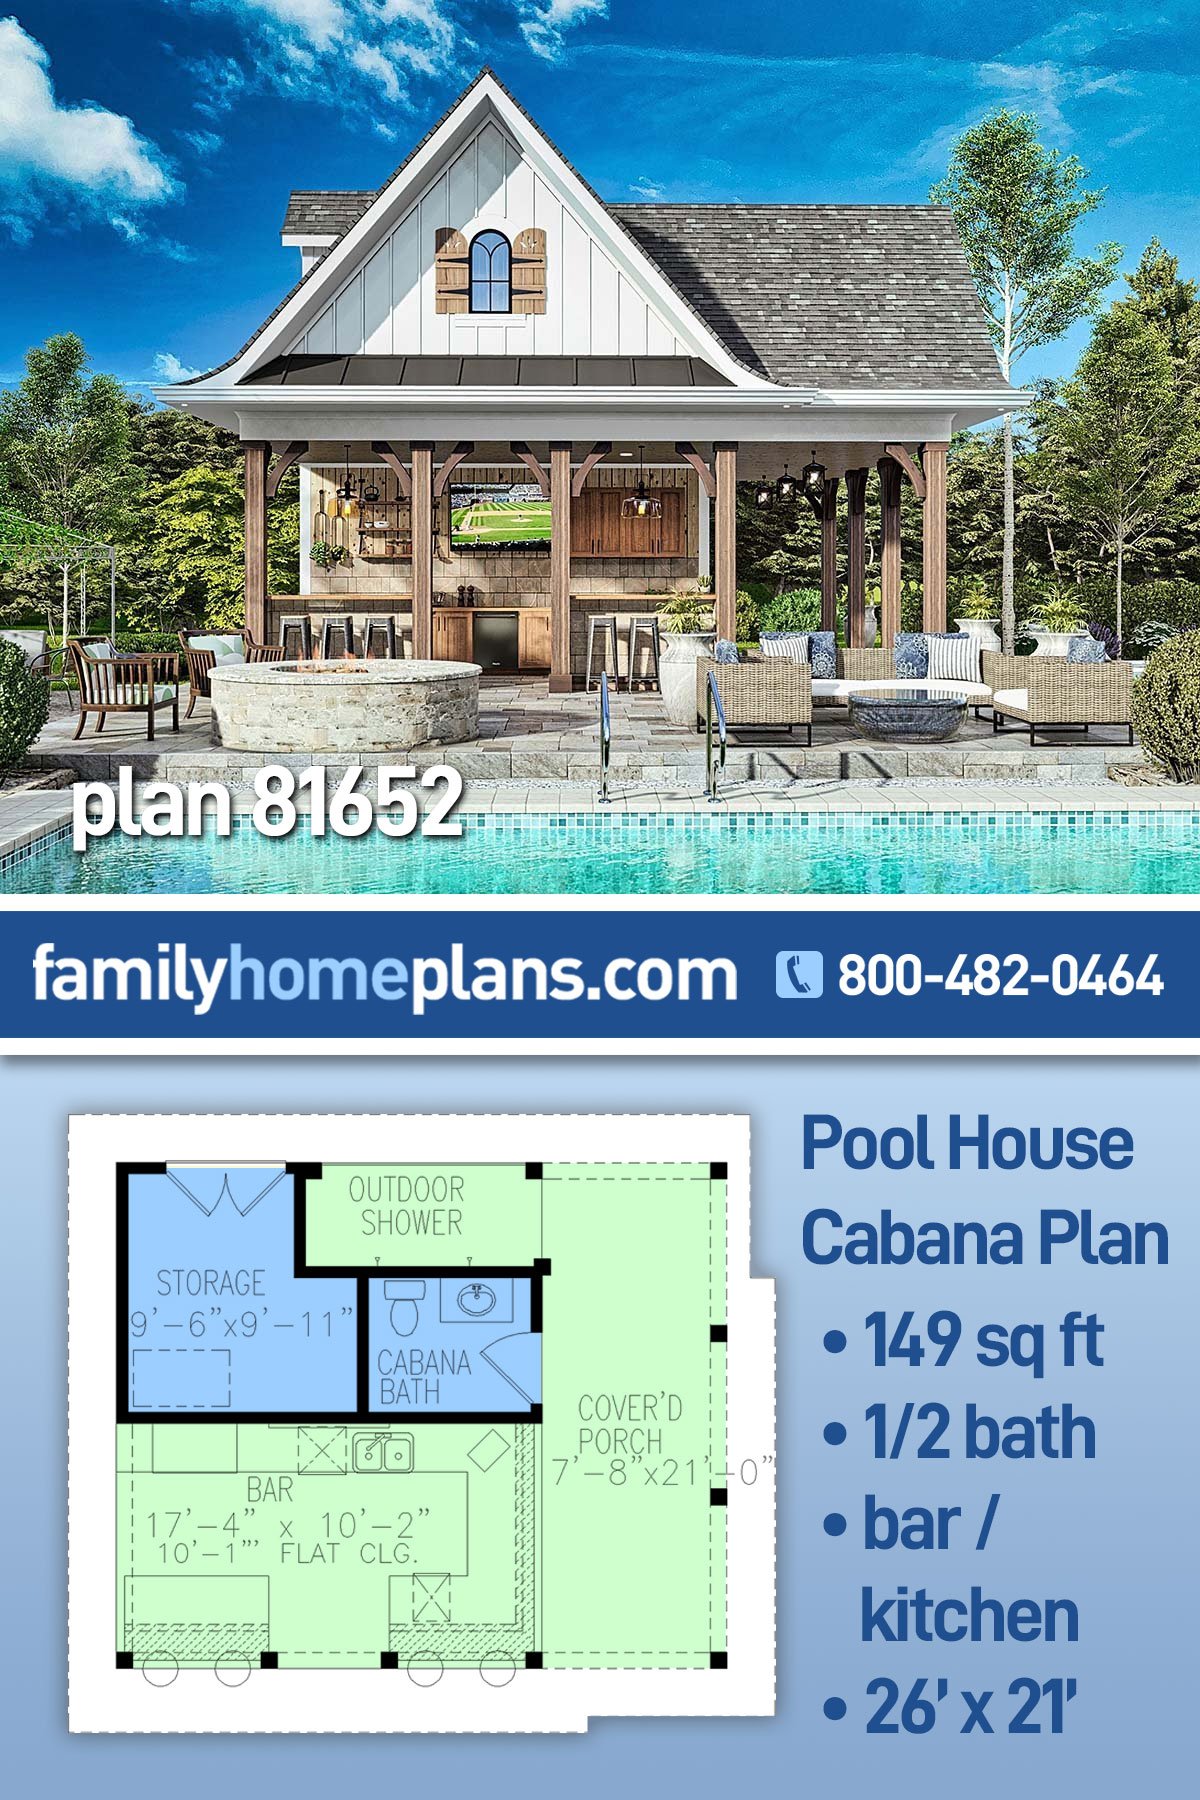 Plan 81652 | Beautiful Pool House Cabana Plan with Storage, Bar a